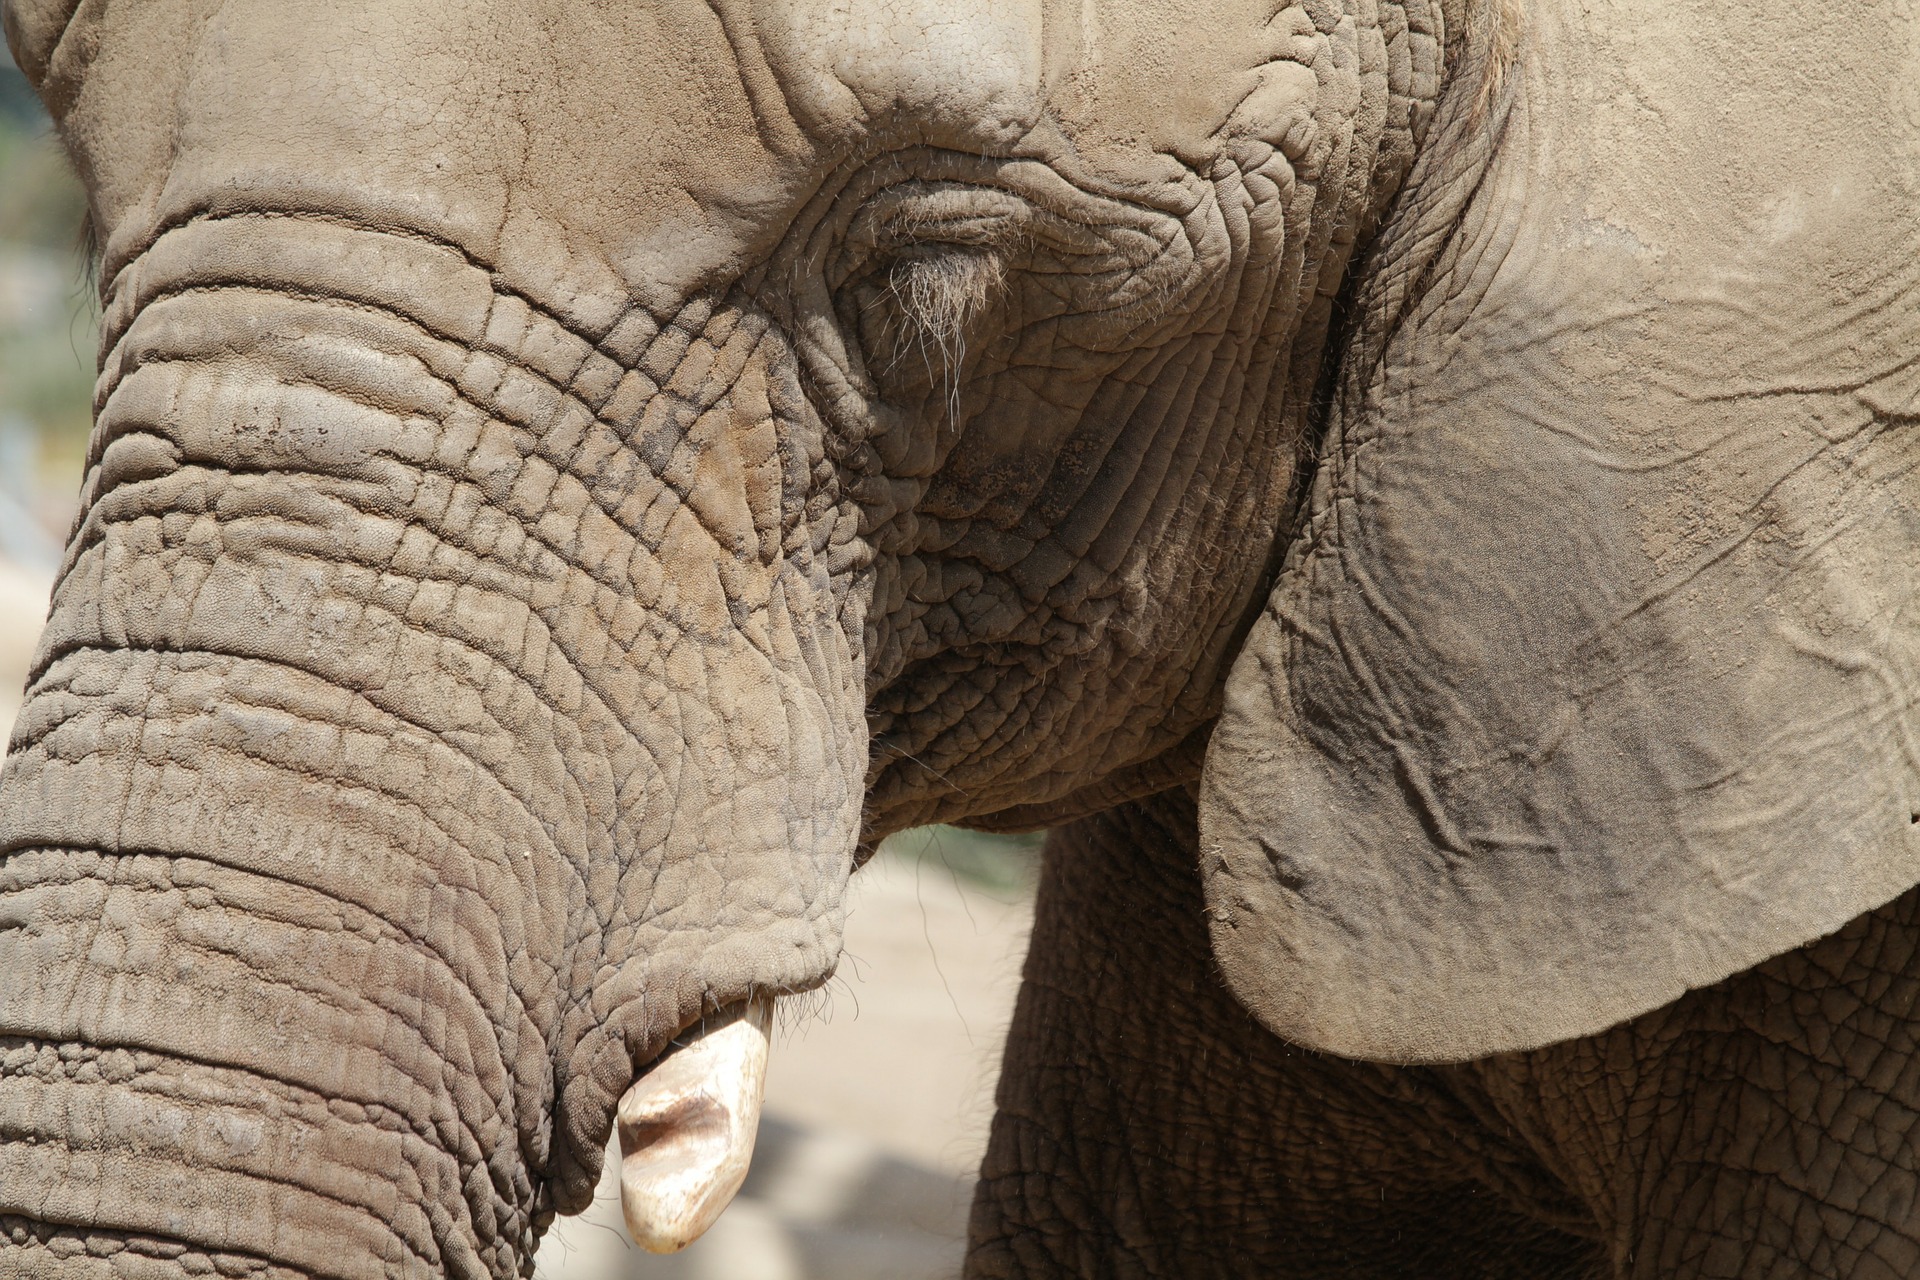 Historia de la elefanta ‘Flavia’